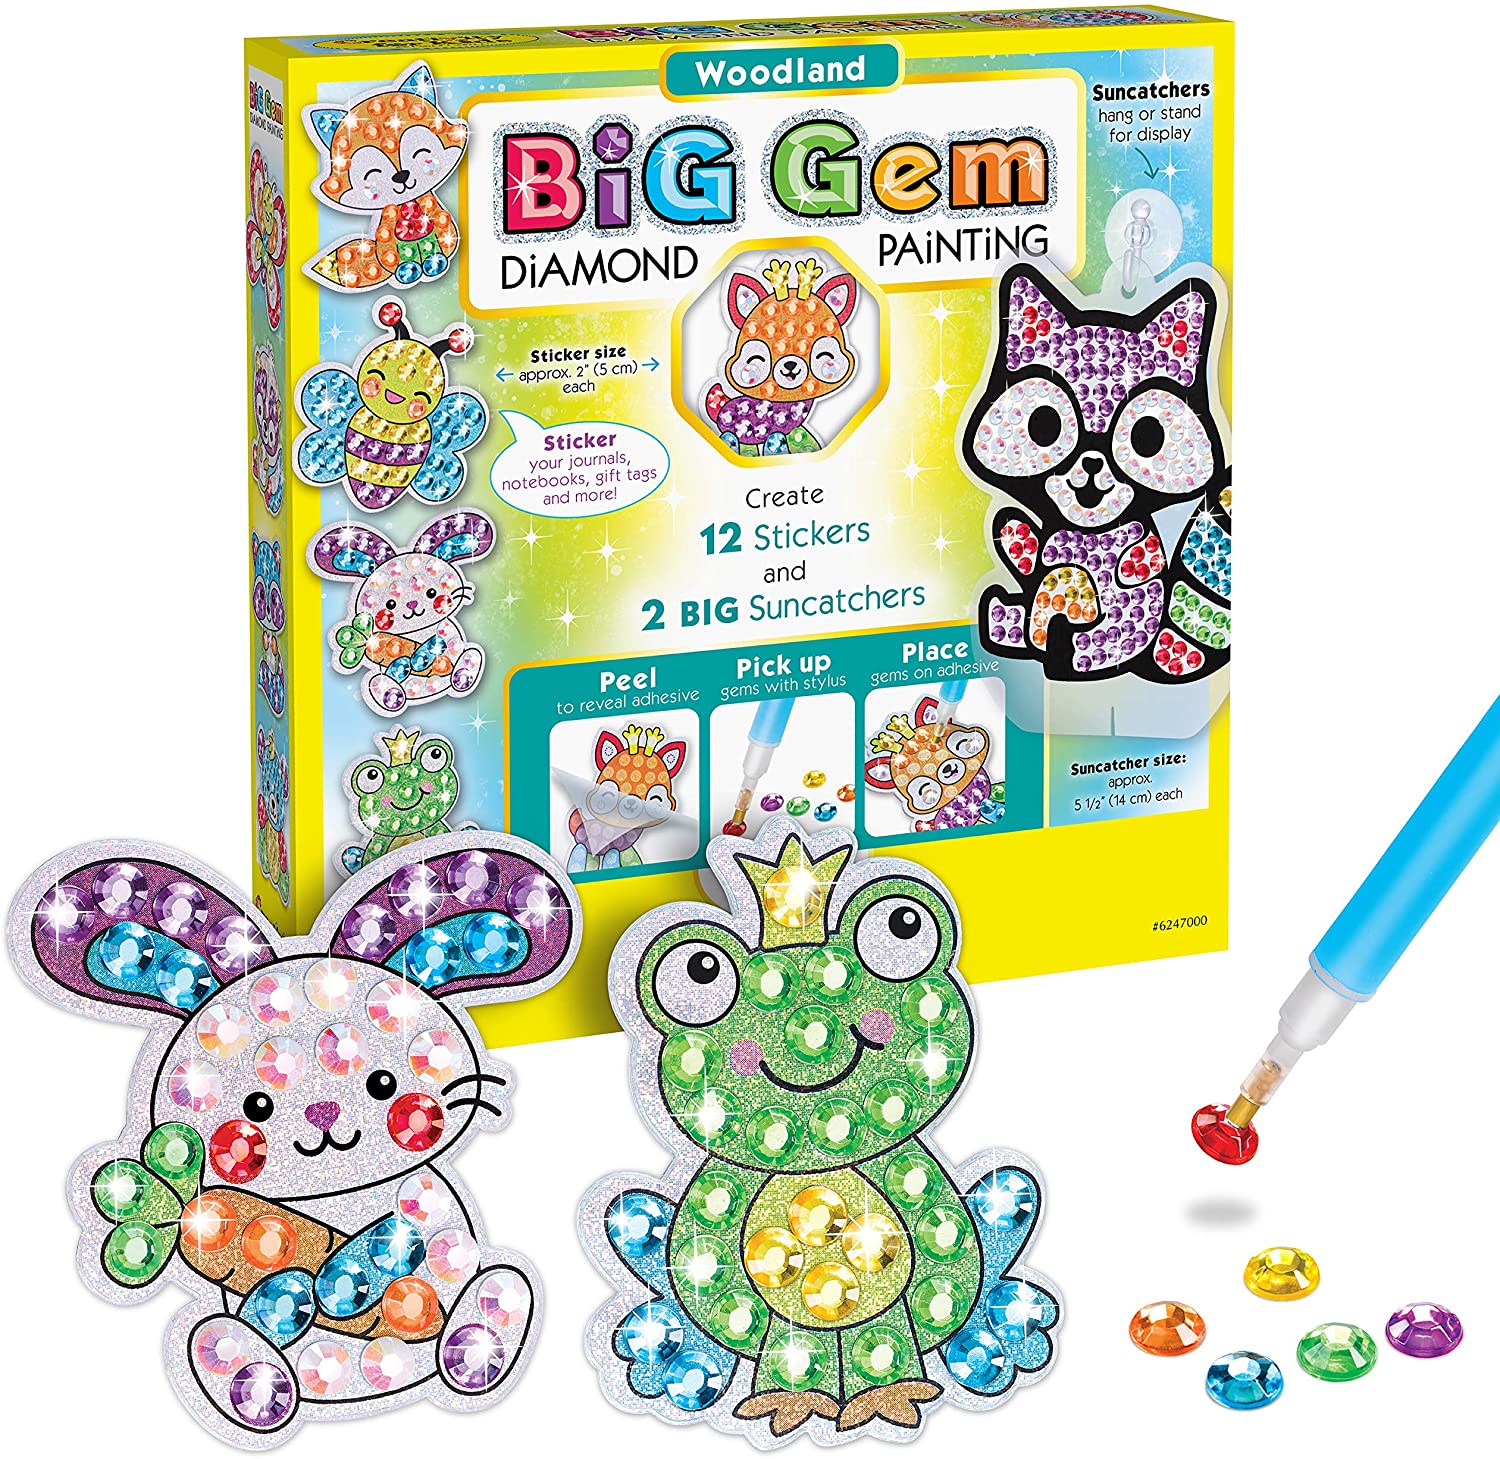 Zonon Gem Diamond Painting Kit For Kids, 24 Pieces Diy Diamond Painting  Stickers, 4 Suncatchers And Diy Painting Tools To Create Your